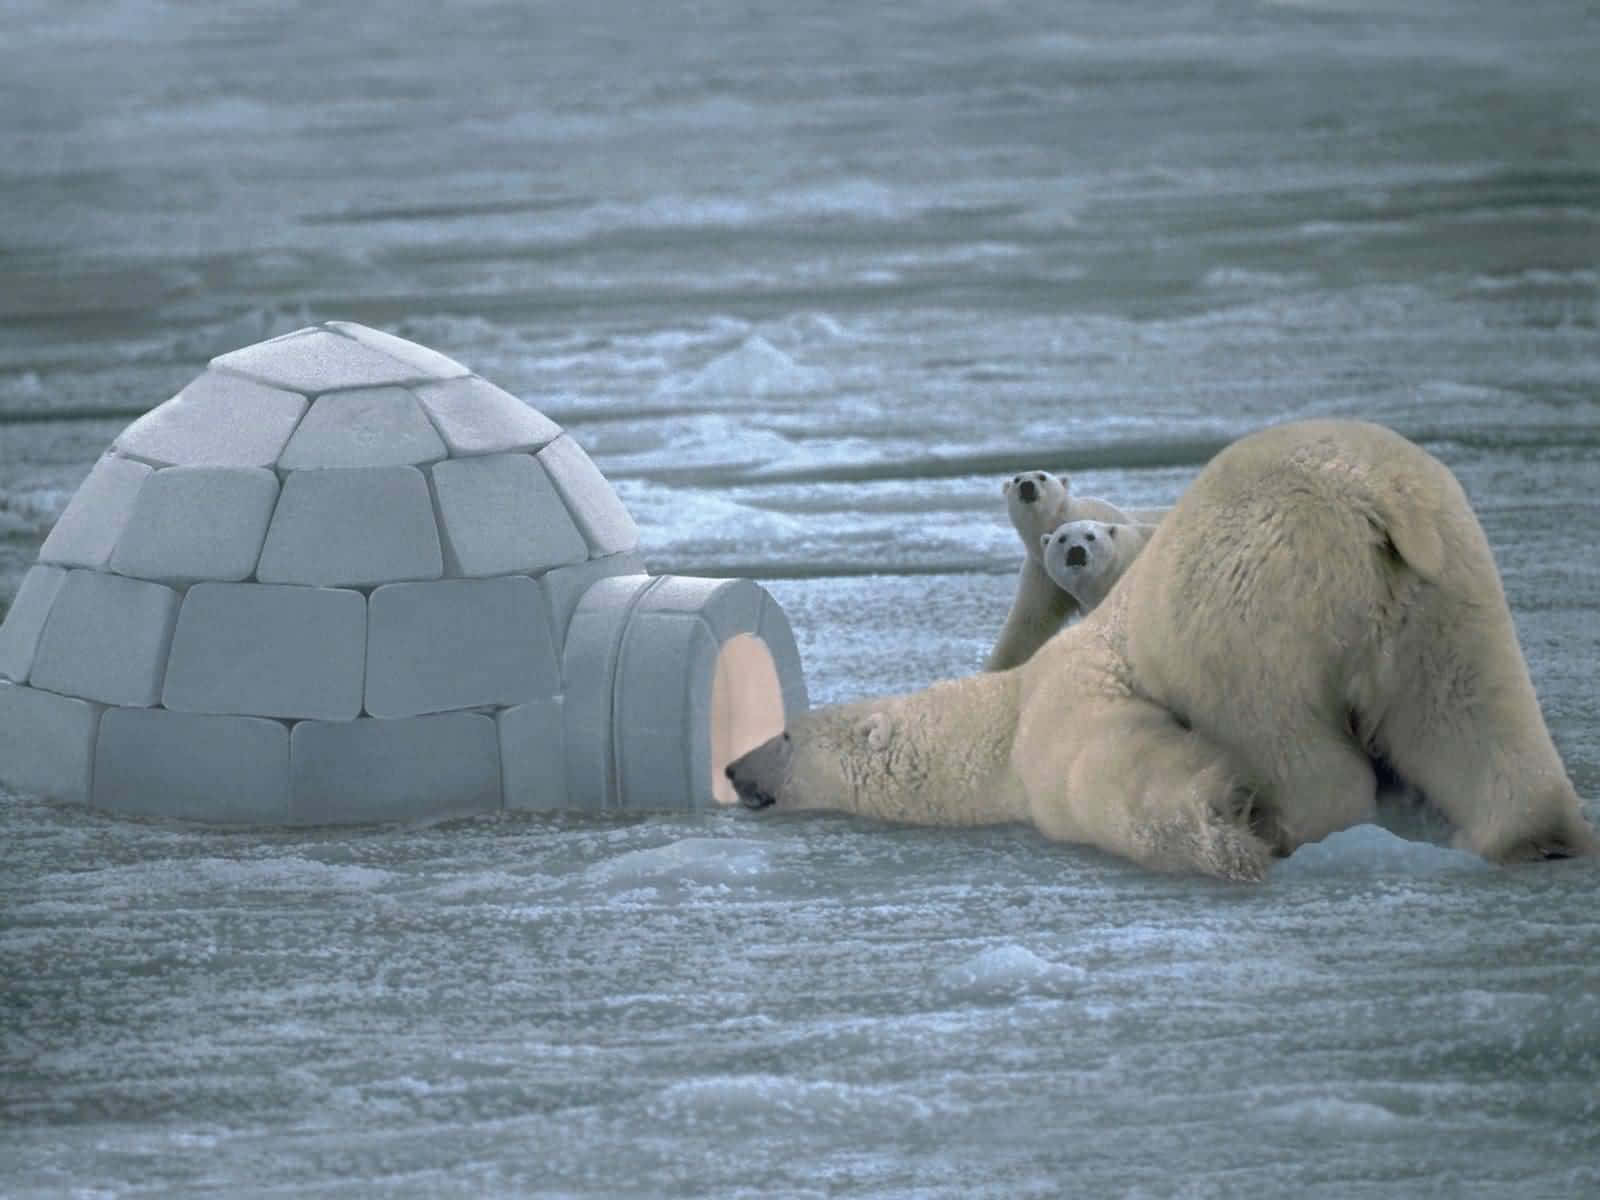 "Beauty of the Arctic: A mother polar bear and her cub walking across the vast frigid tundra."